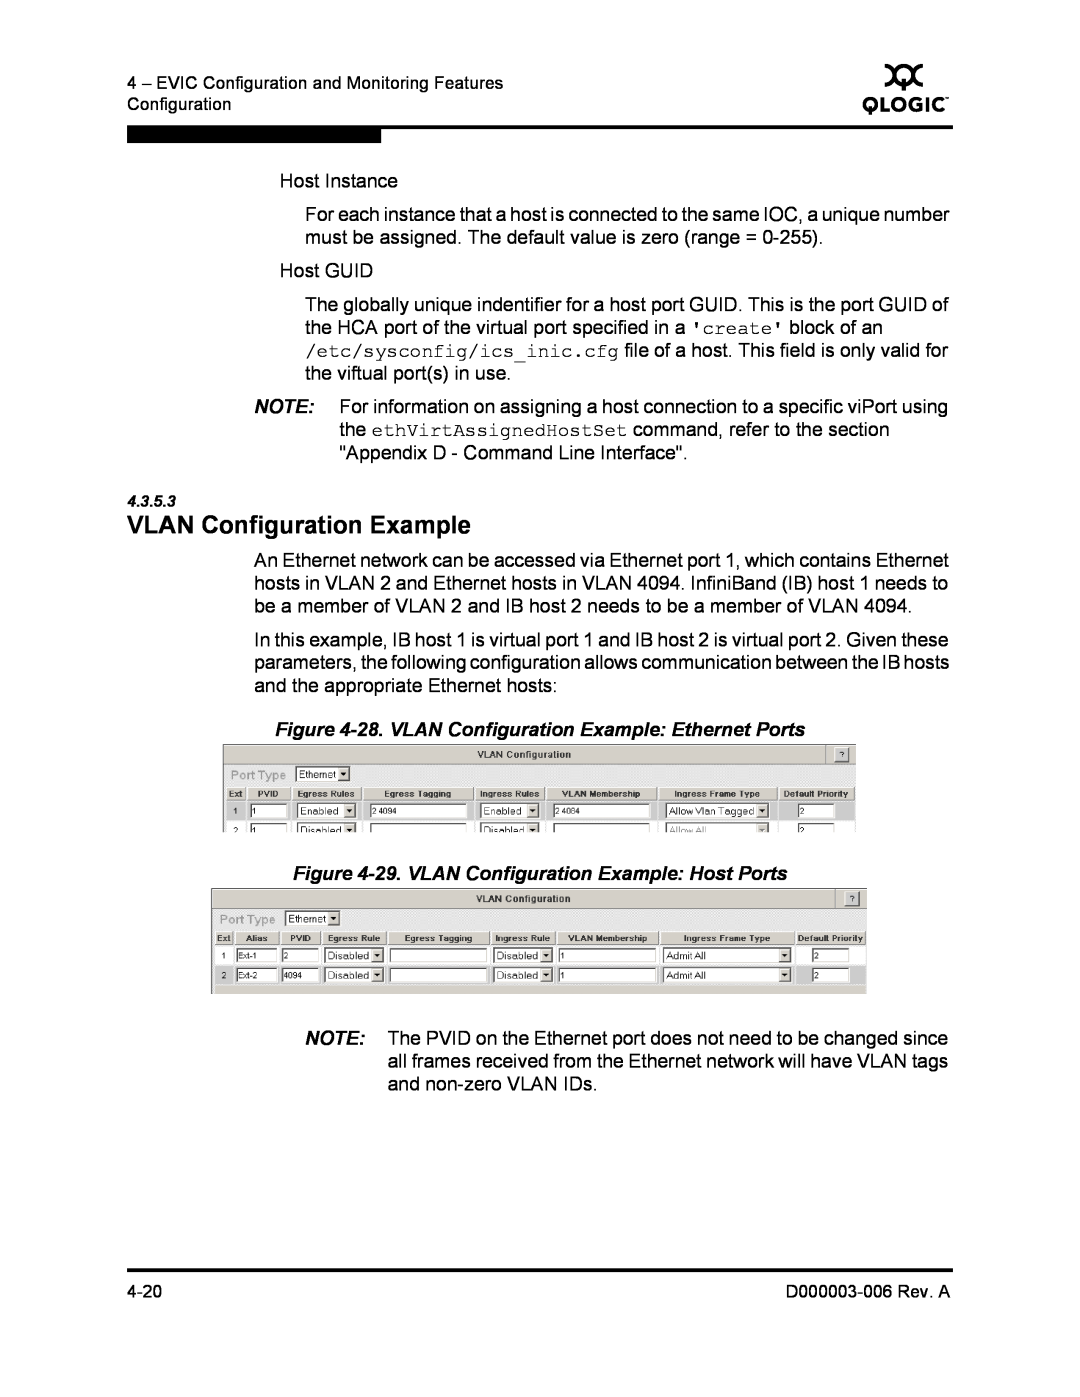 Q-Logic 9000 manual 28. VLAN Configuration Example Ethernet Ports, 29. VLAN Configuration Example Host Ports 